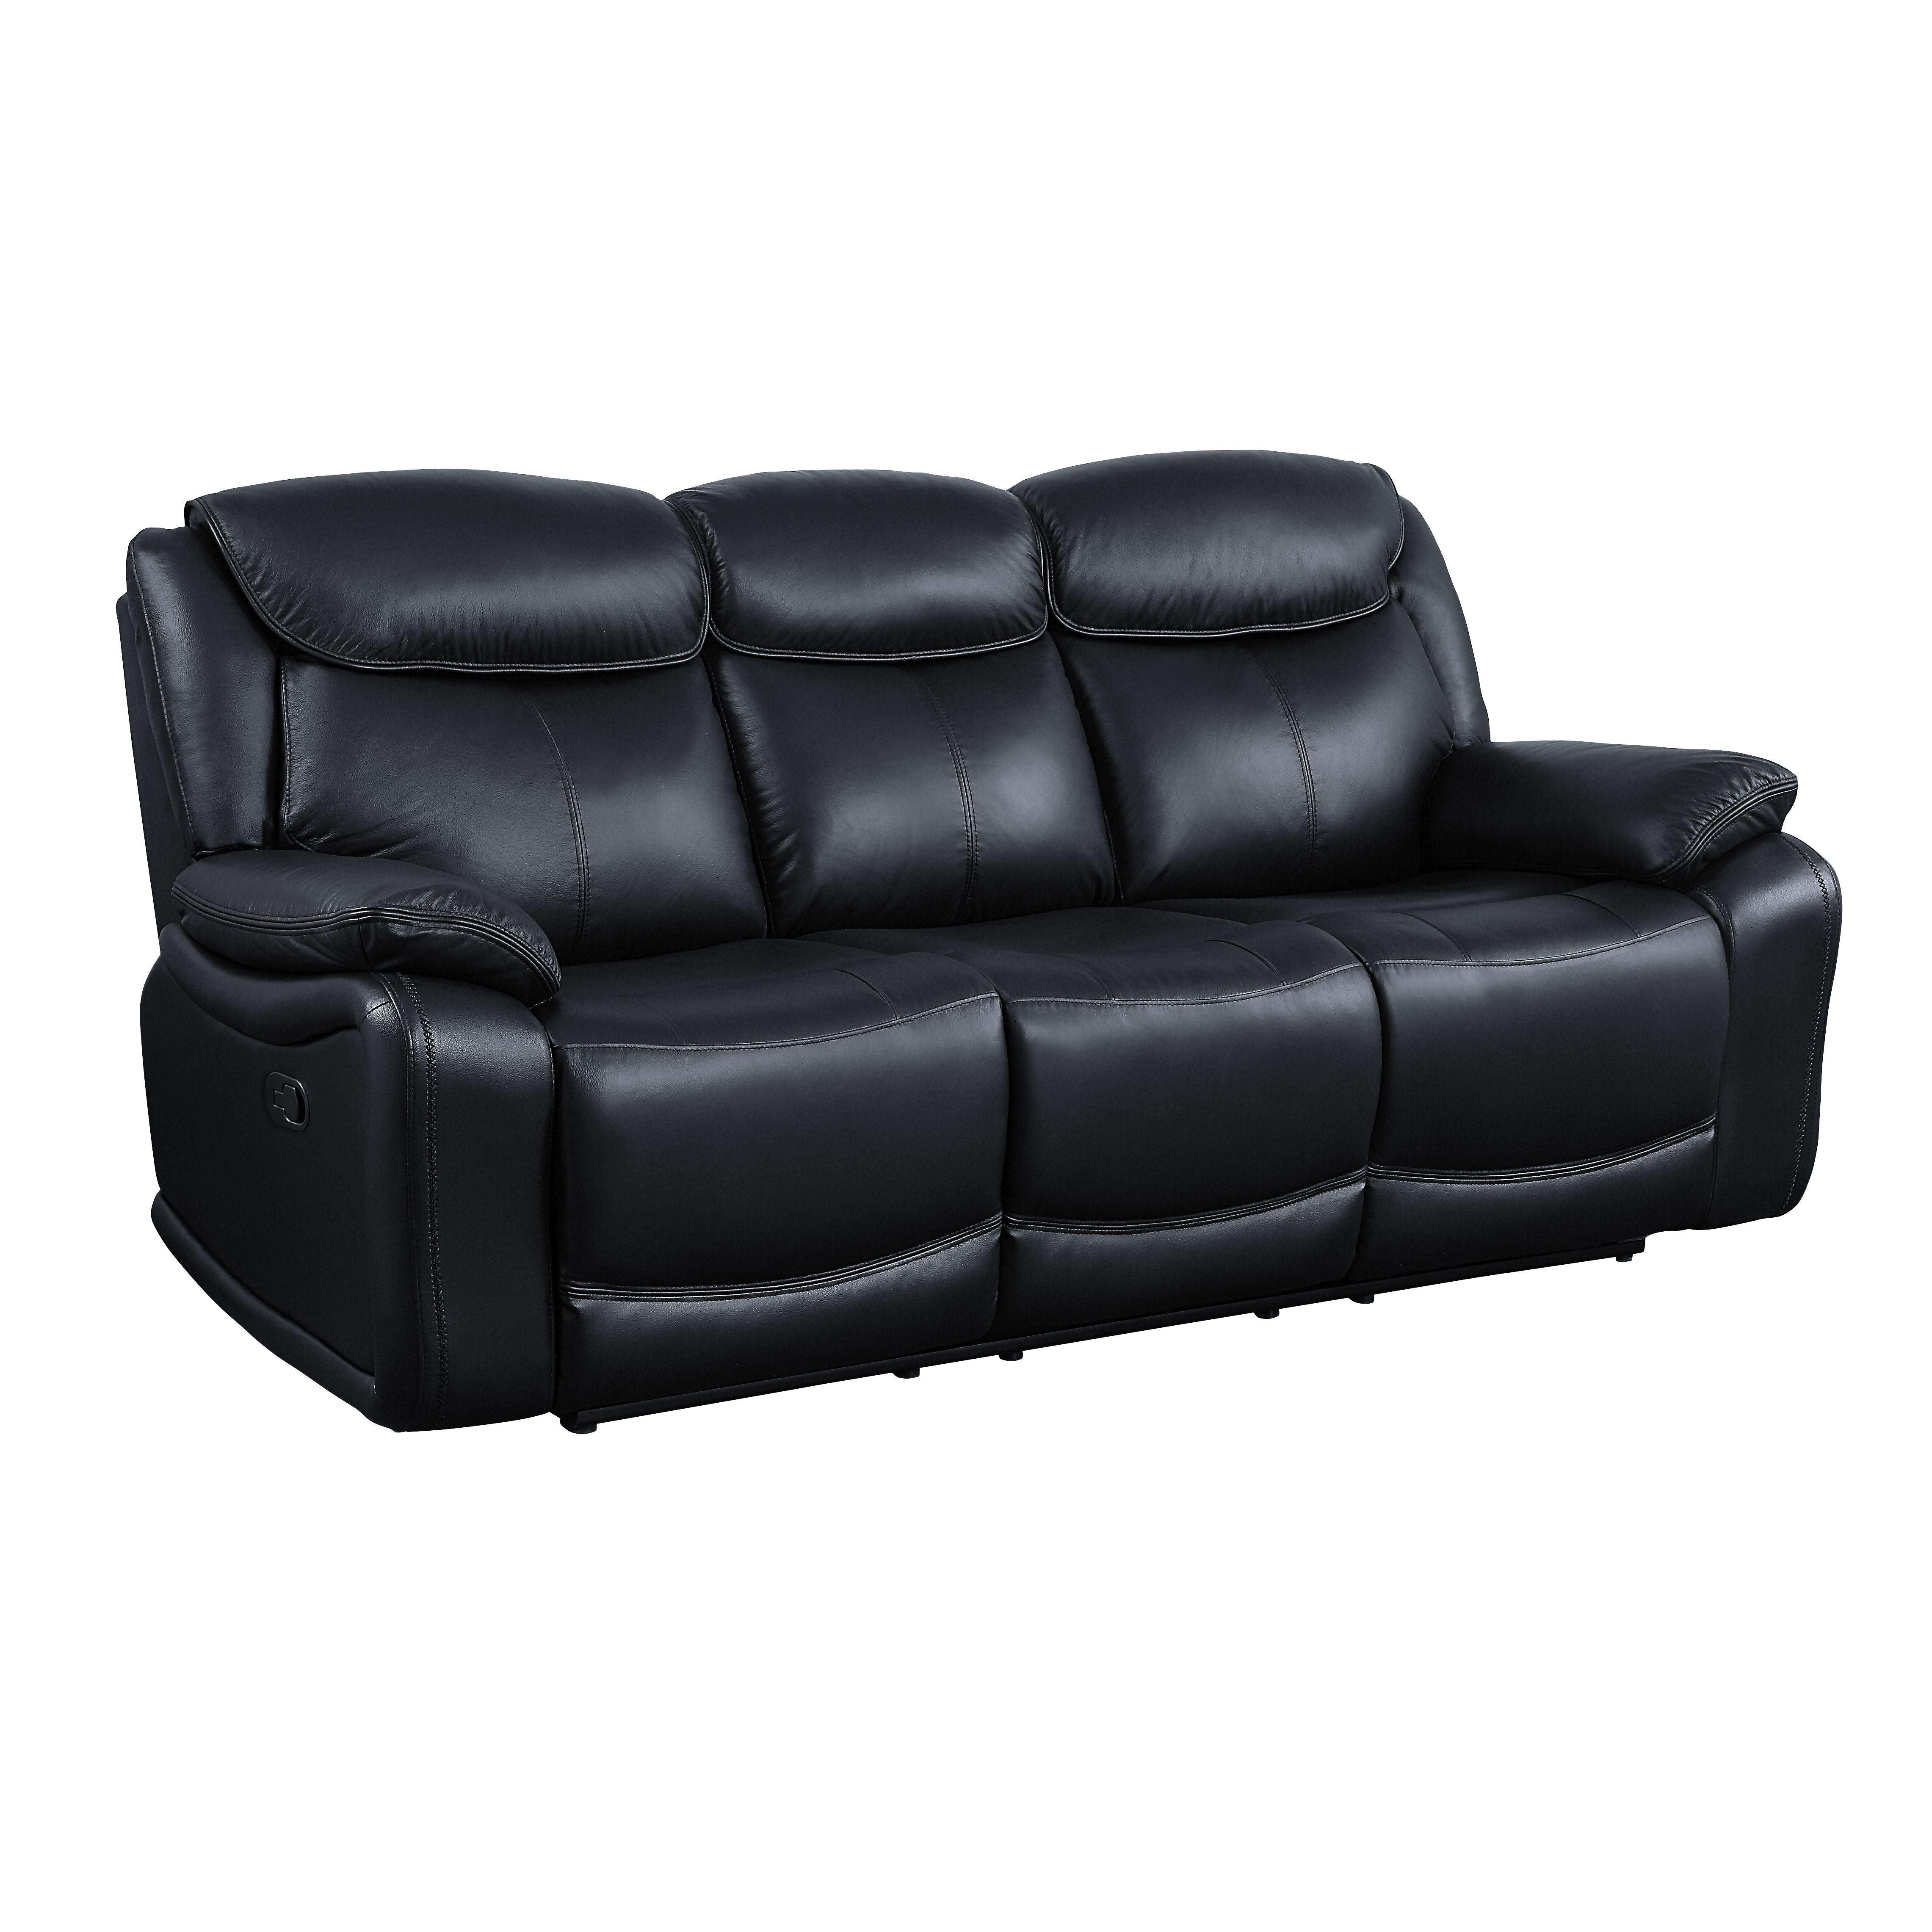 ACME - Ralorel - Sofa - Black Top Grain Leather - 5th Avenue Furniture